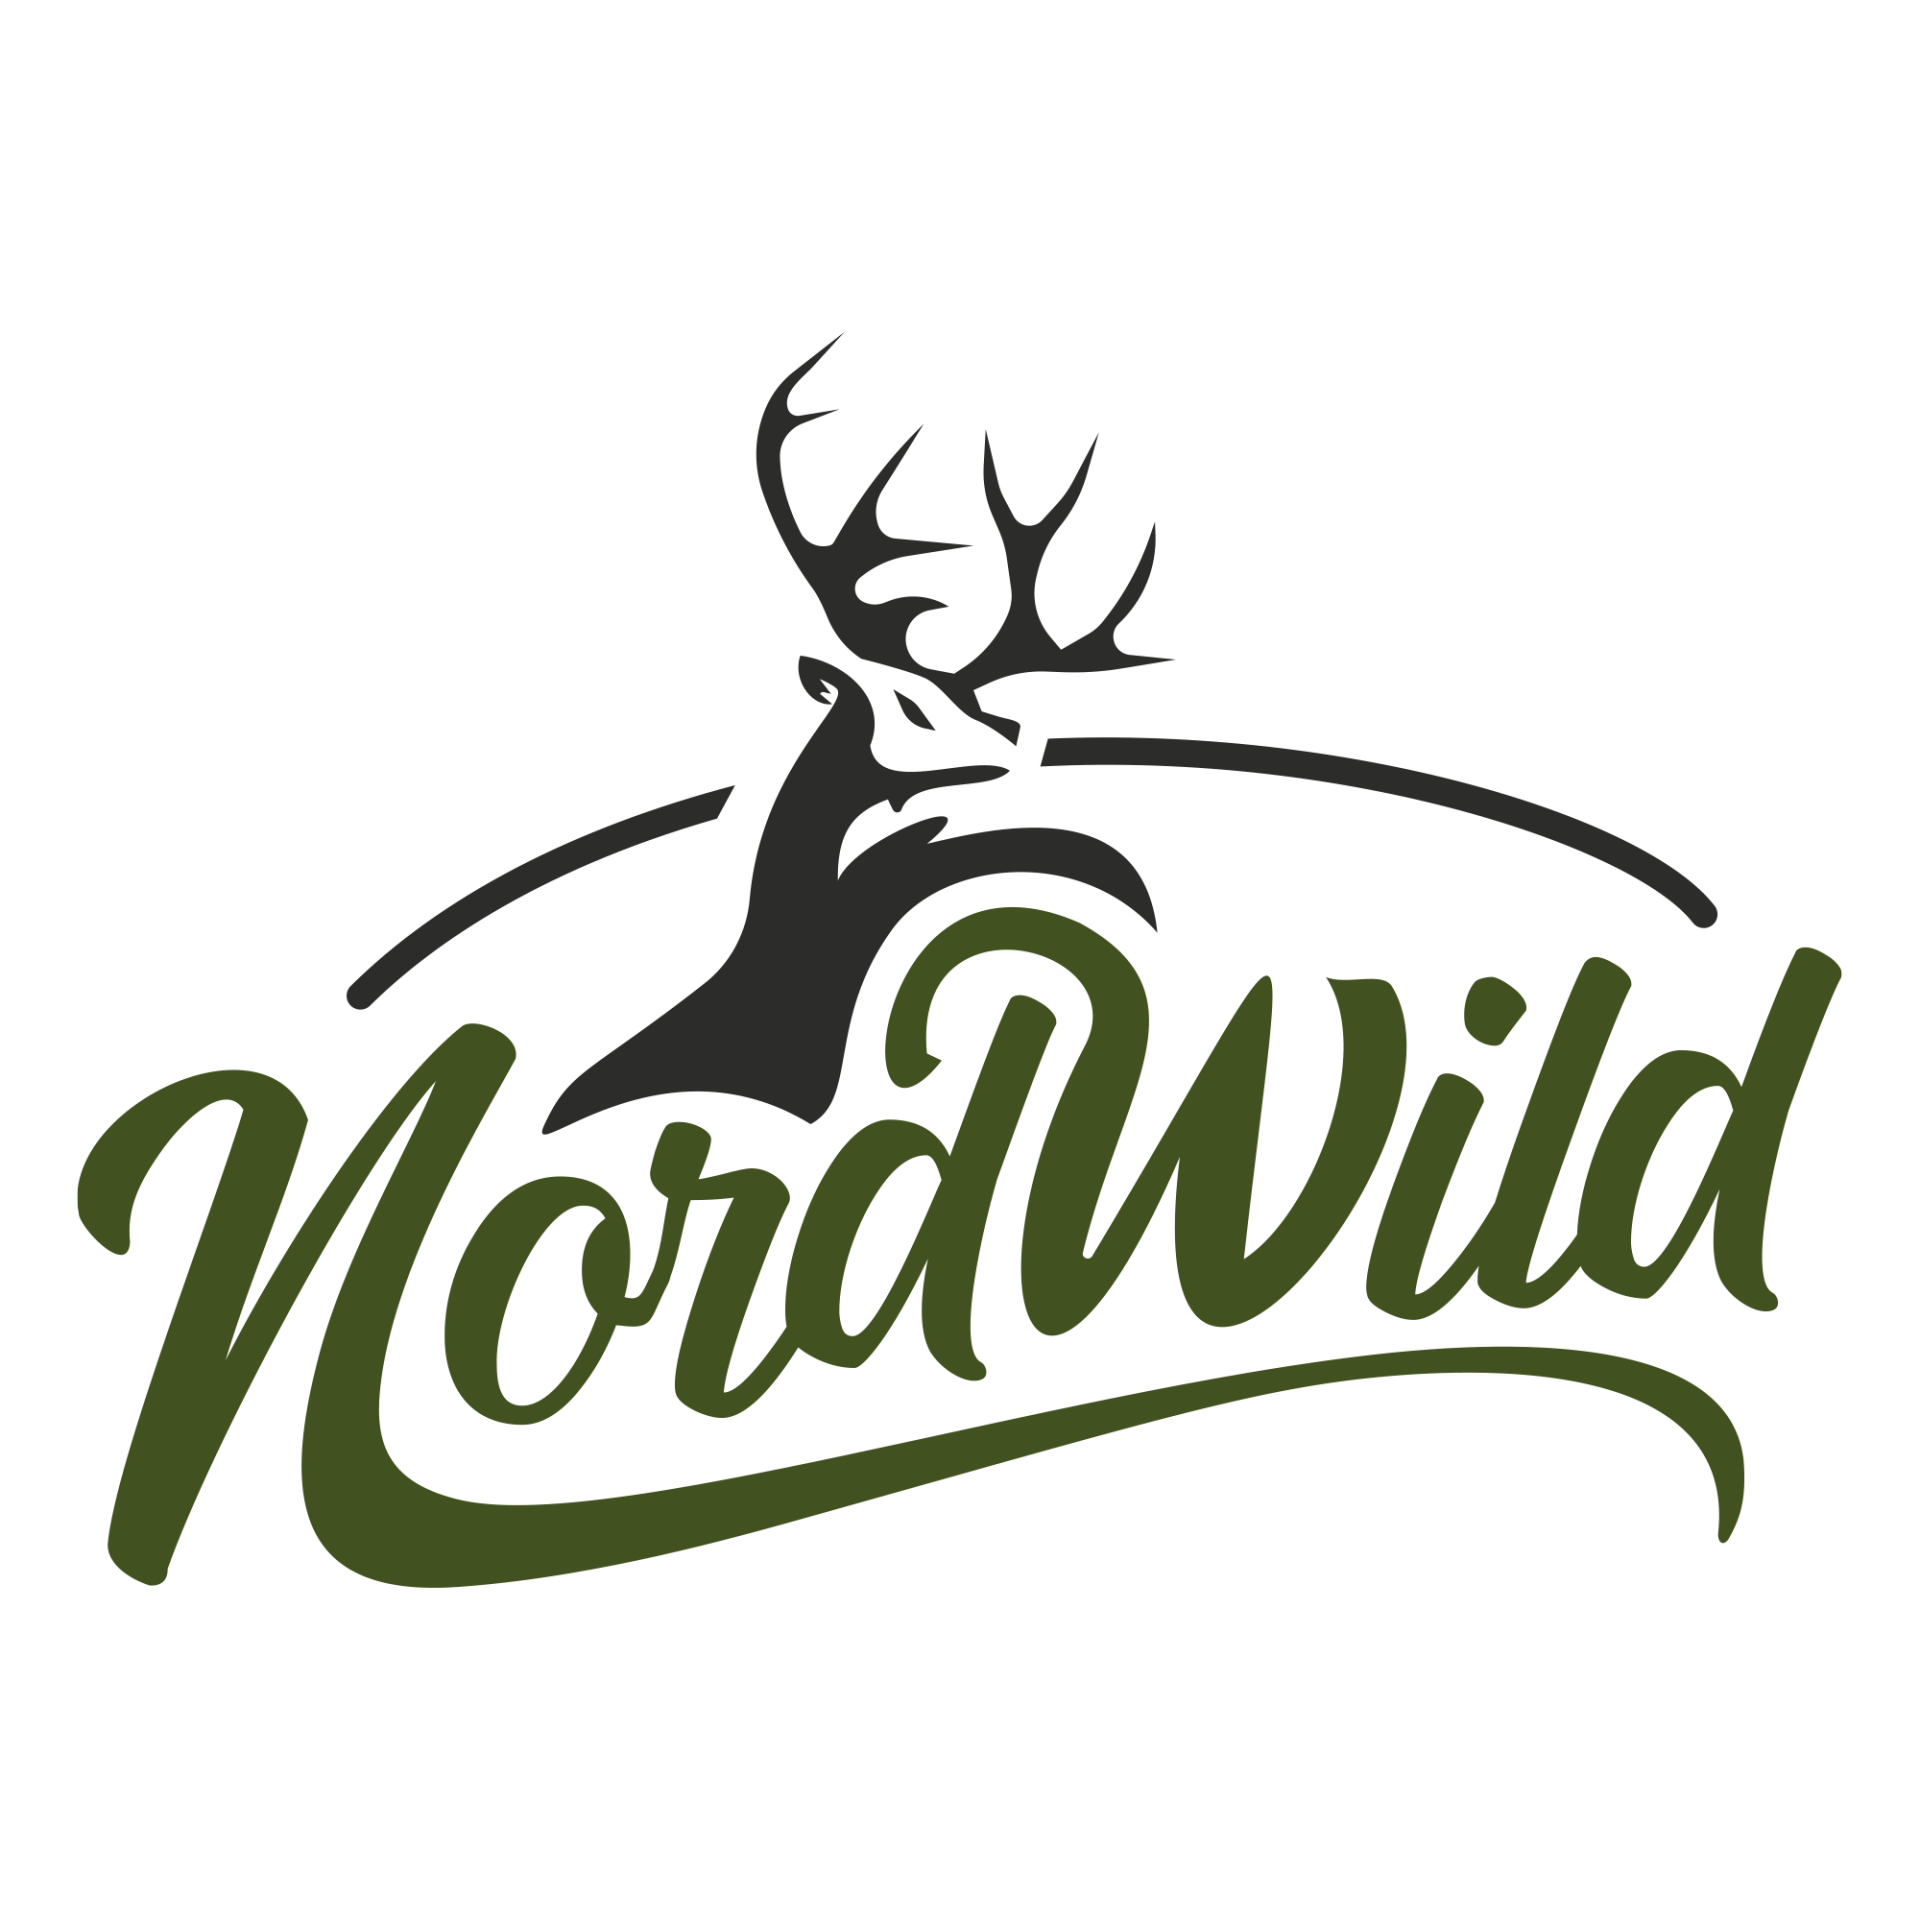 Logo Nordwild 01